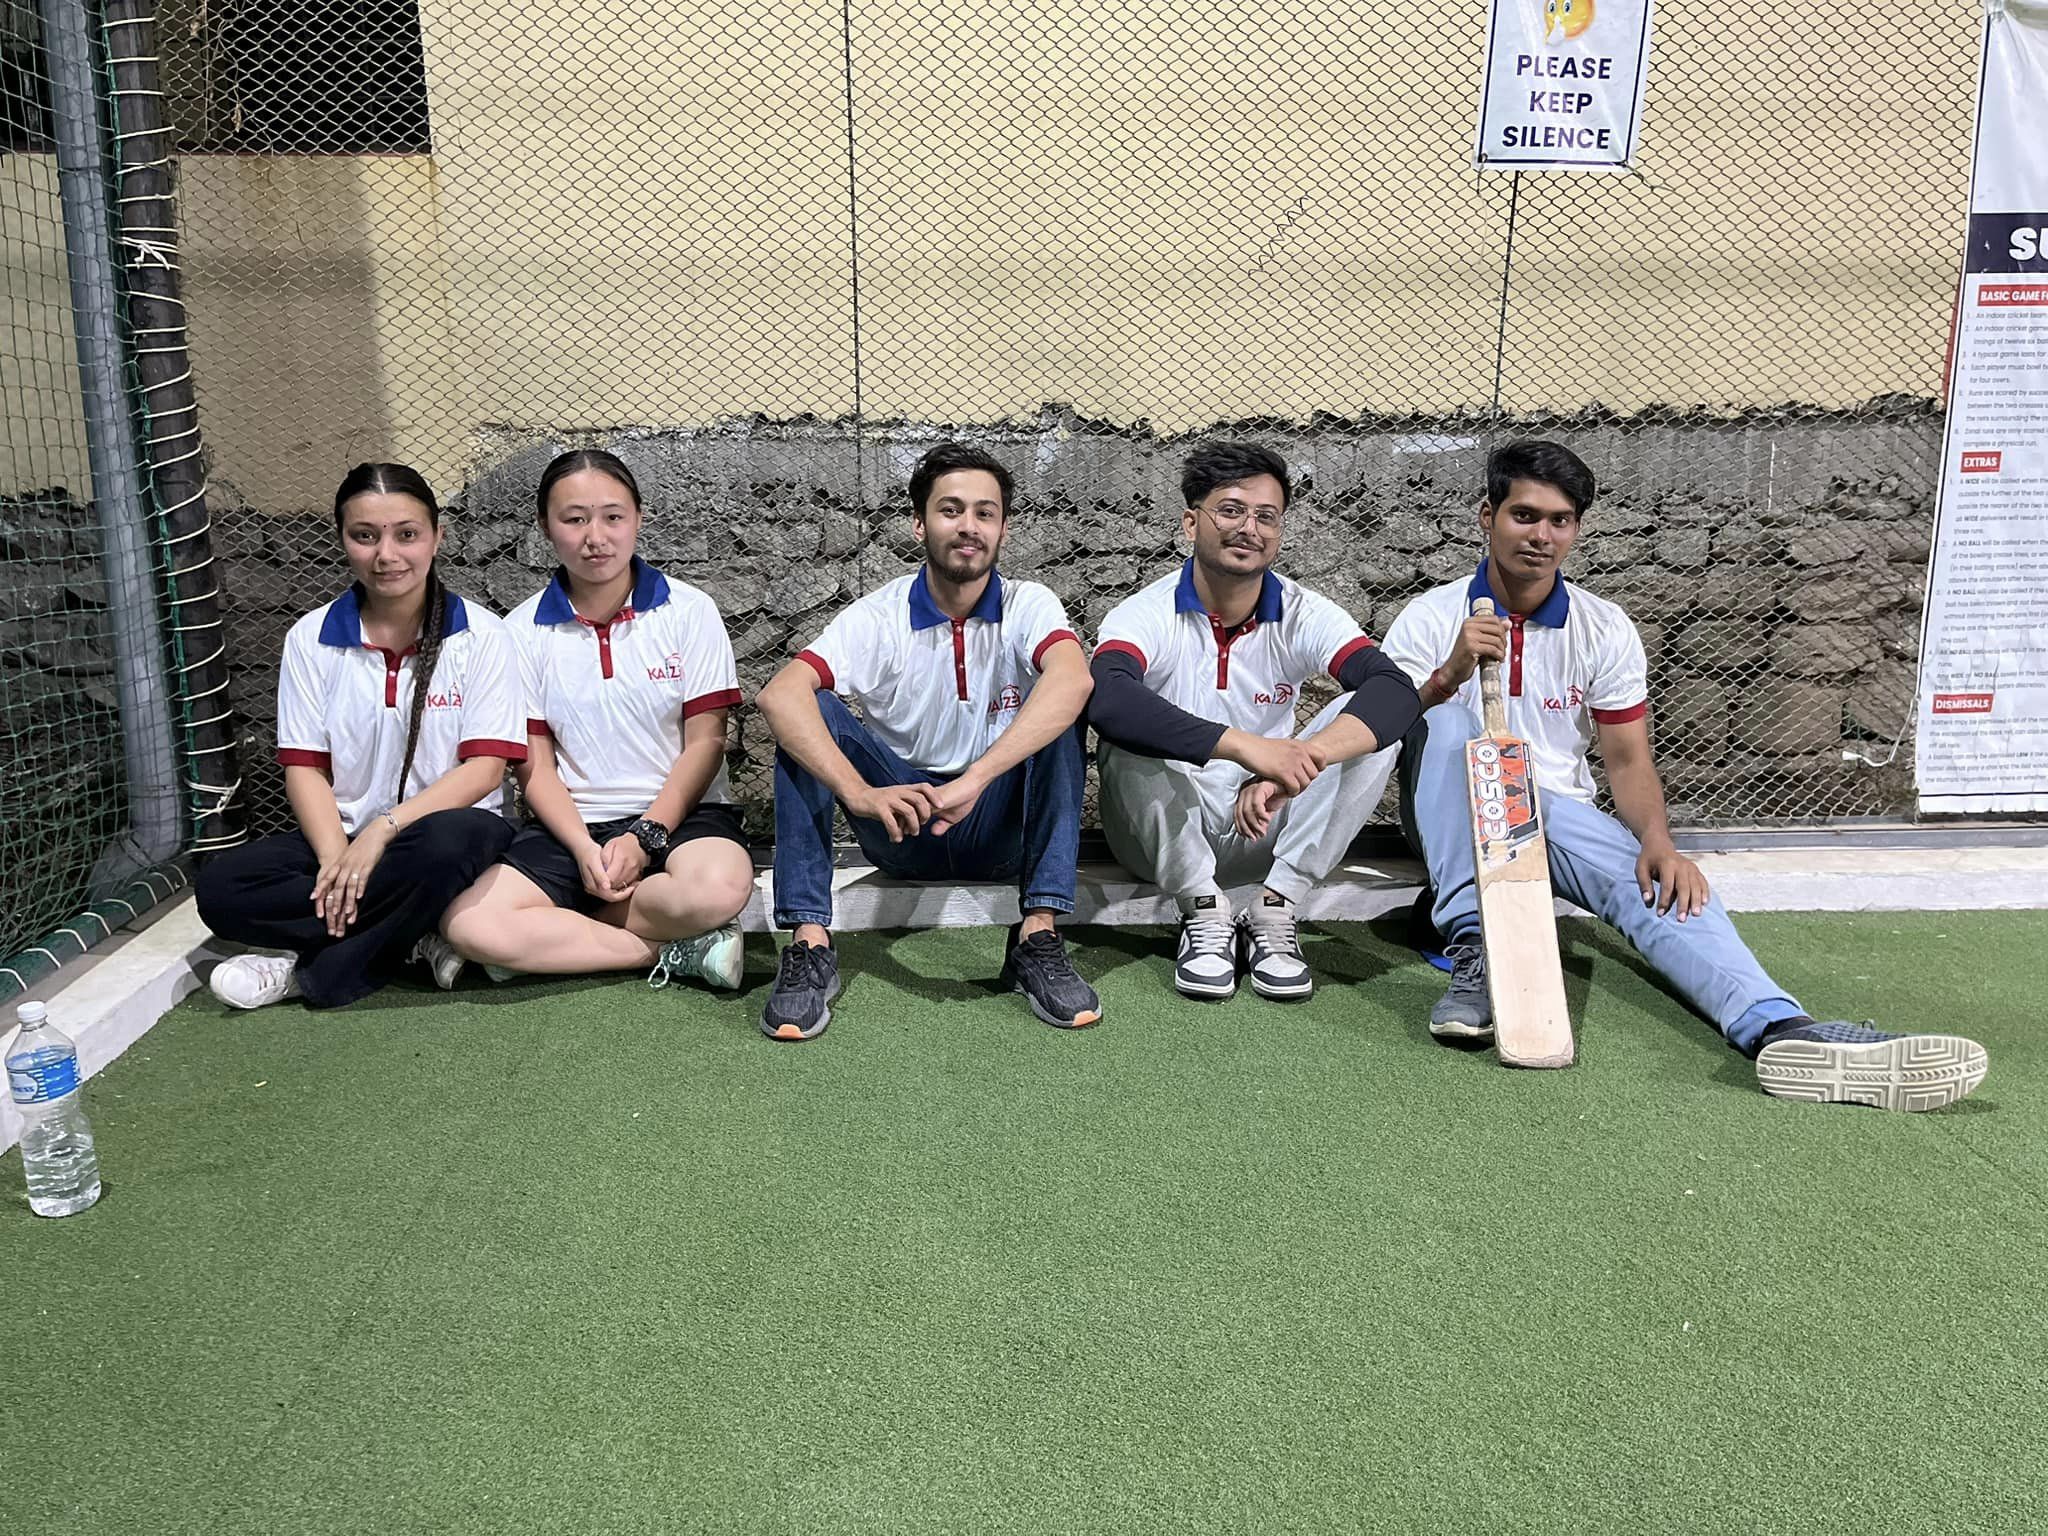 Kaizen's Cricket Fun Day: Bringing Everyone Together